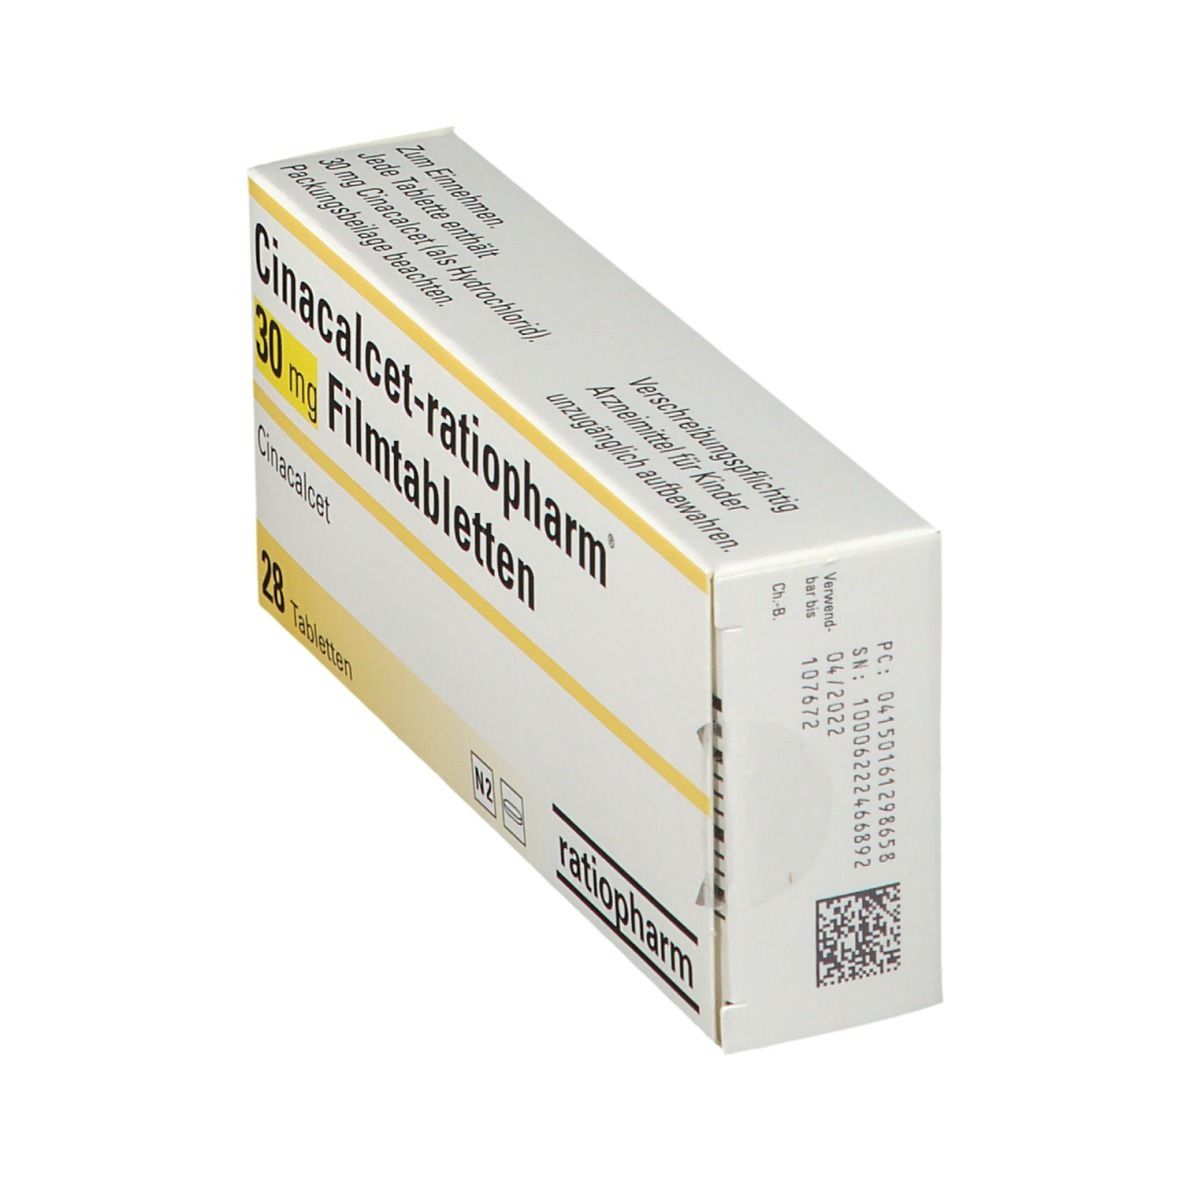 Cinacalcet-ratiopharm® 30 mg